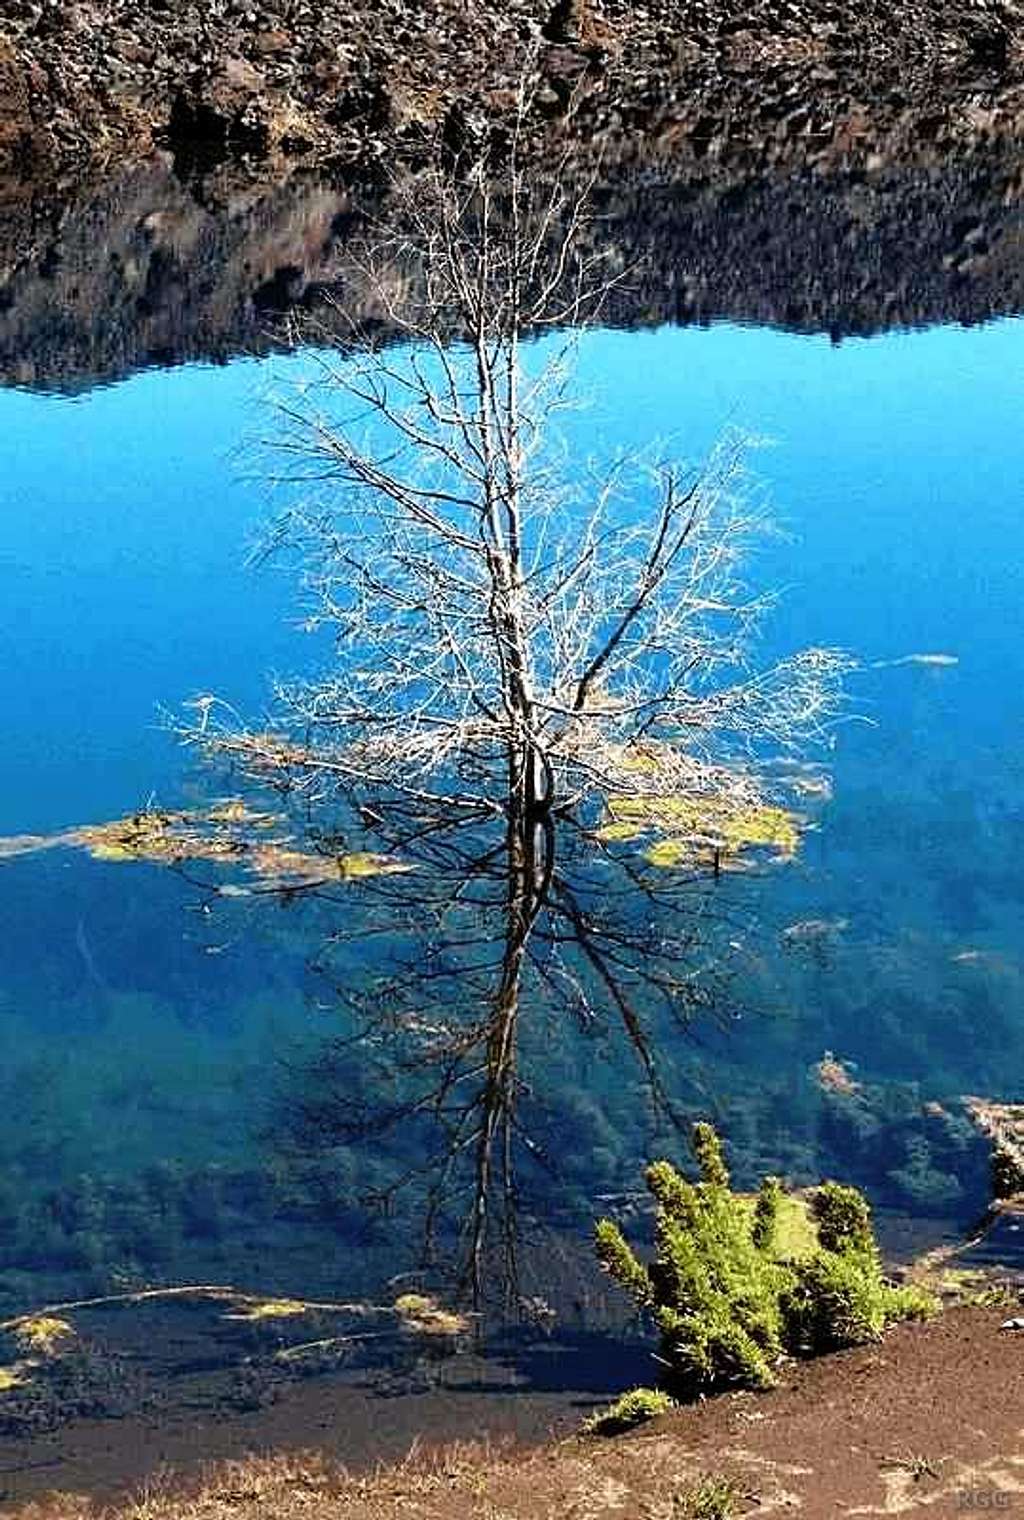 Drowned tree